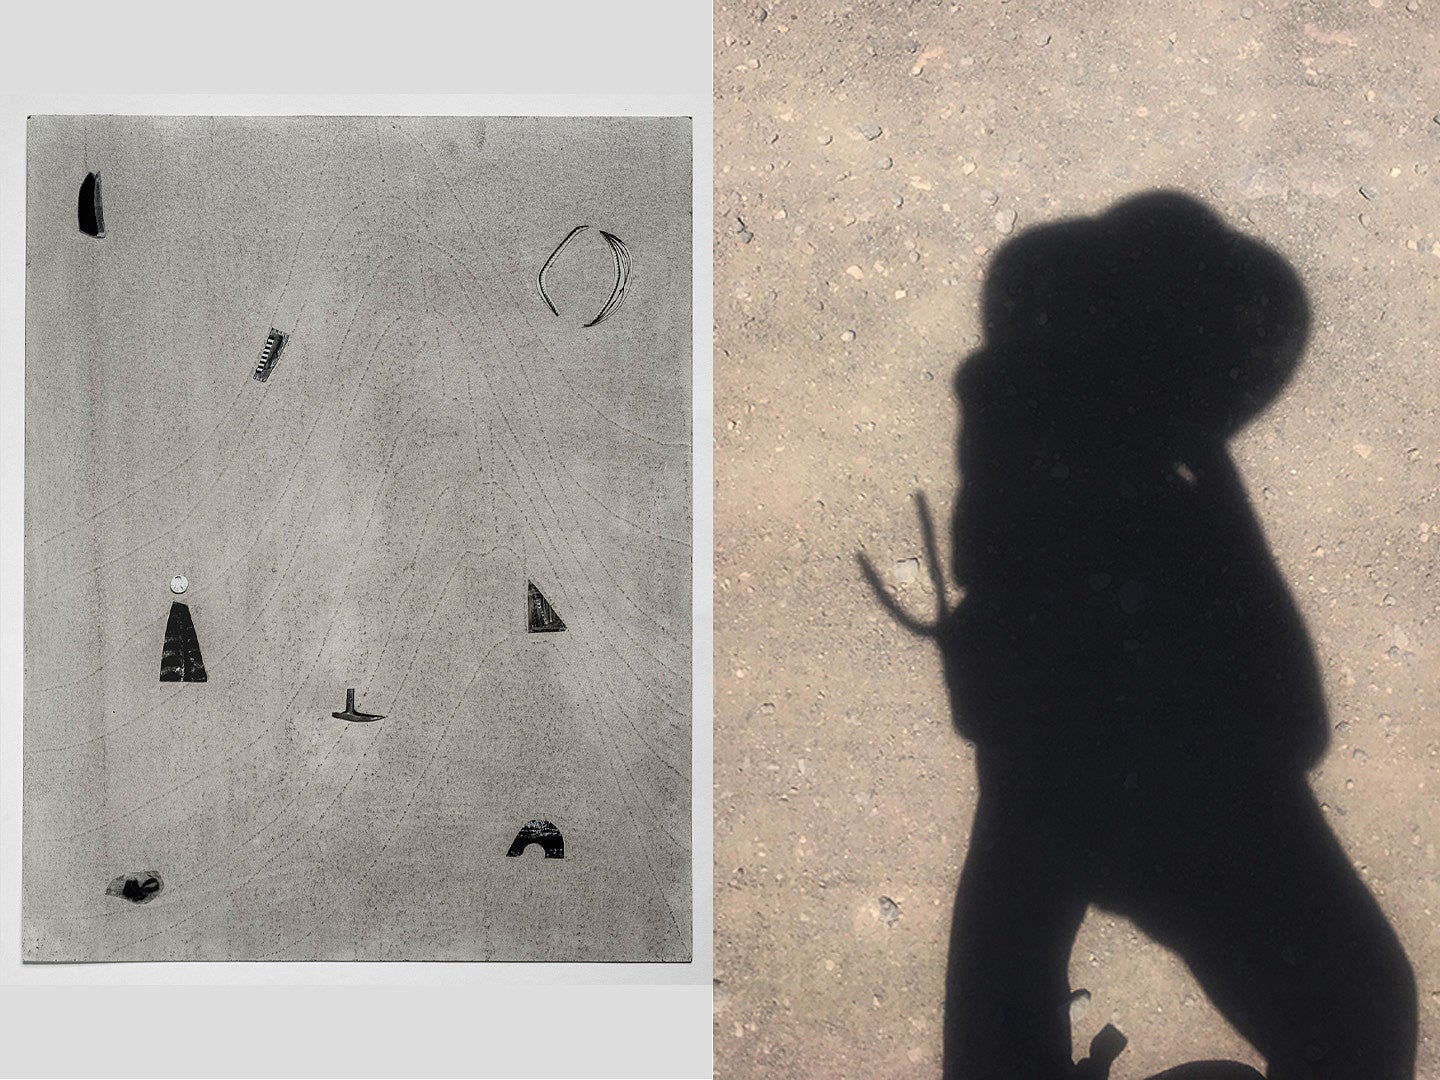 Photograph of Dionne Lee's artwork alongside a photograph of Dionne Lee's shadow cast on the ground. 